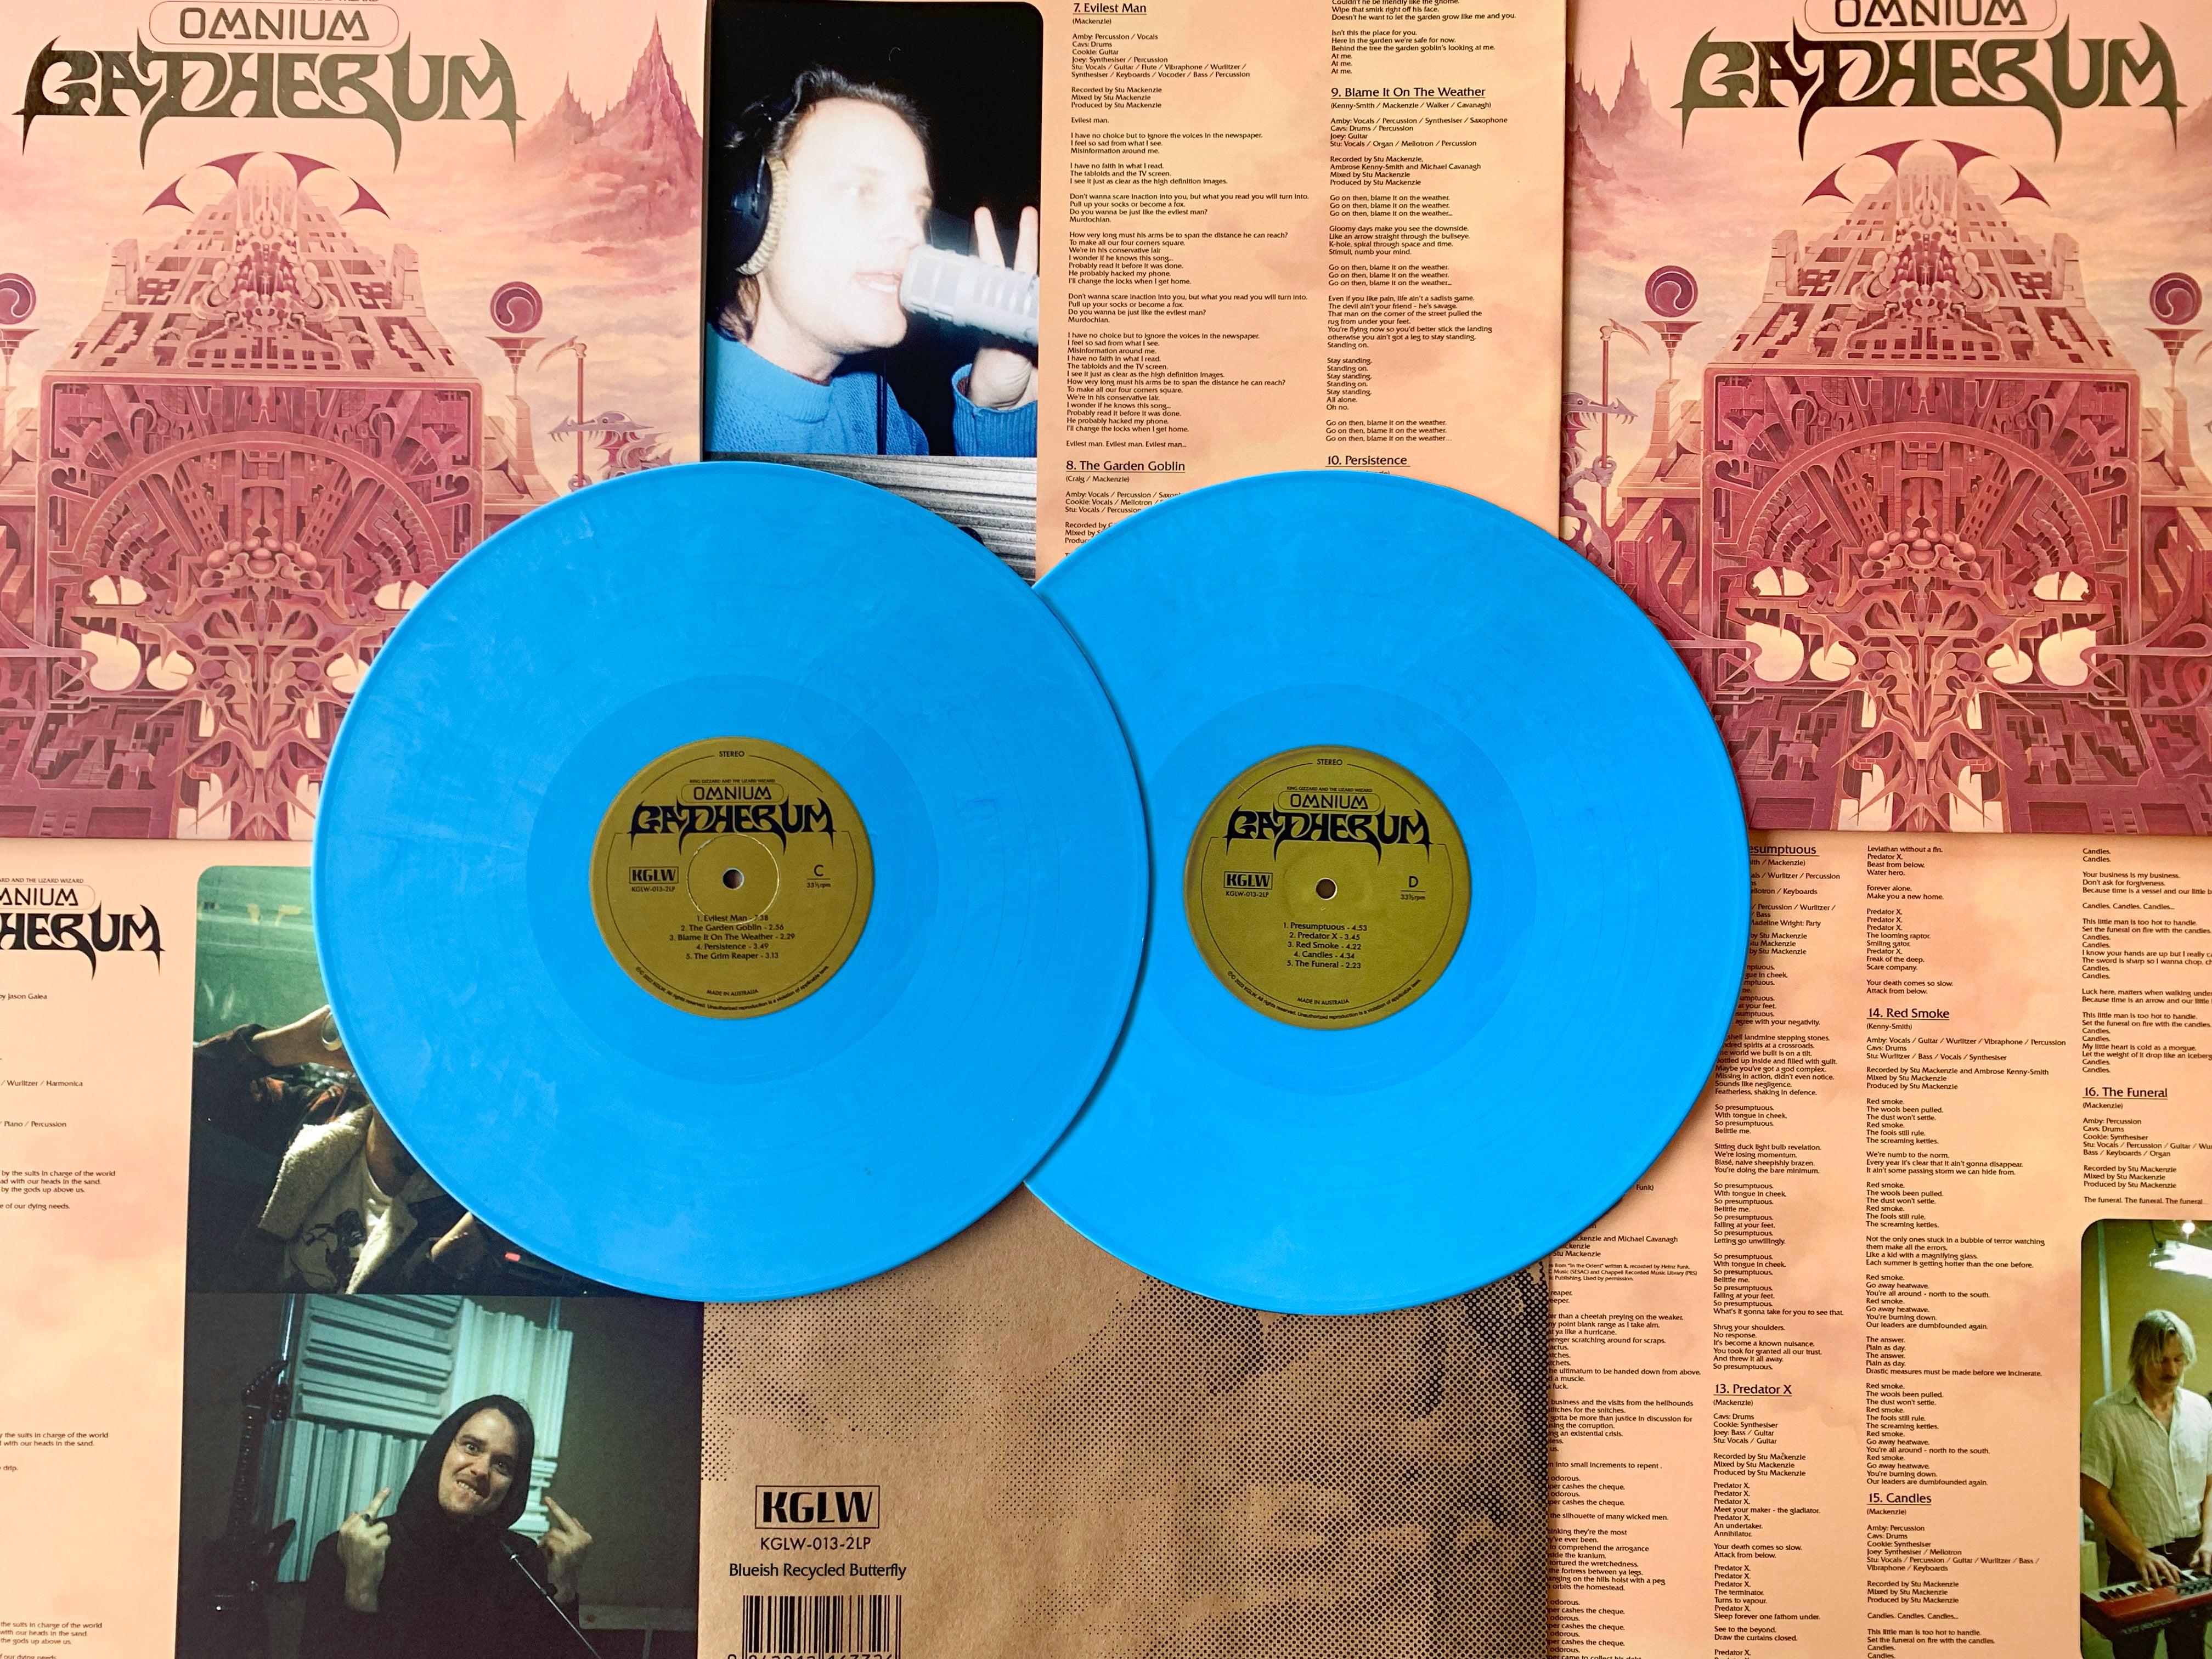 Omnium Gatherum - Blueish Recycled Butterfly LP